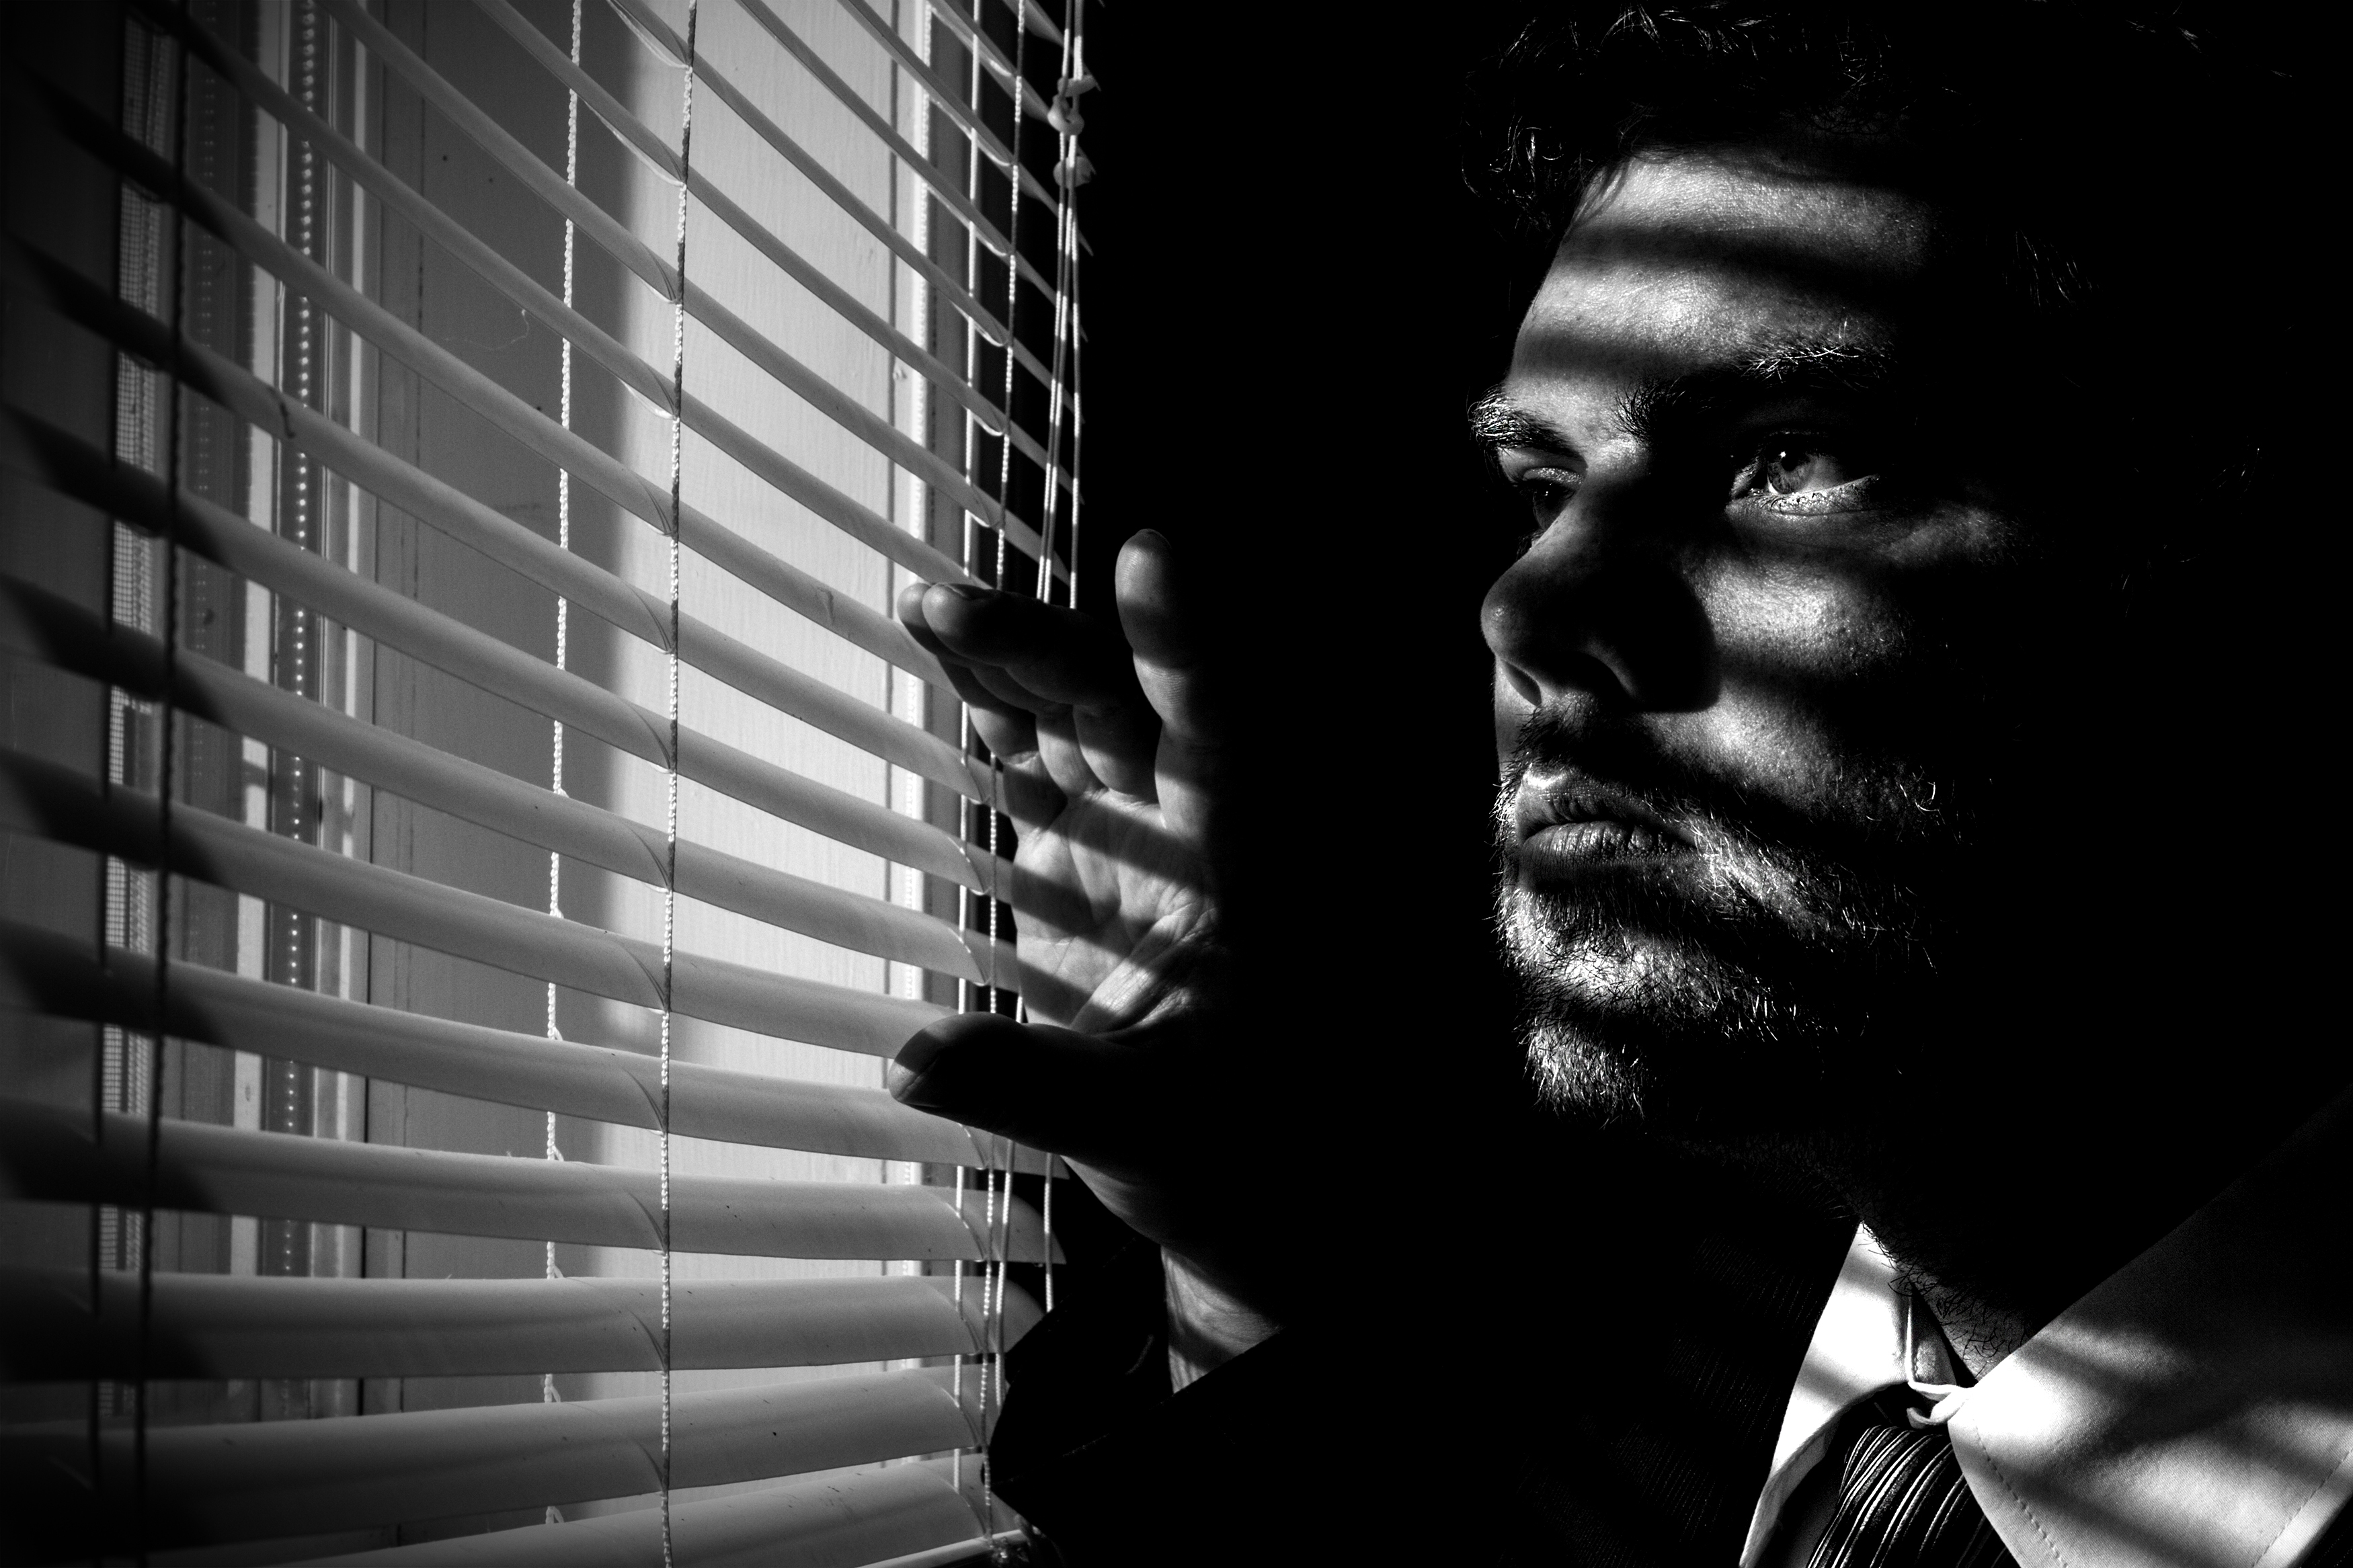 A man peeking through the window | Source: Shutterstock